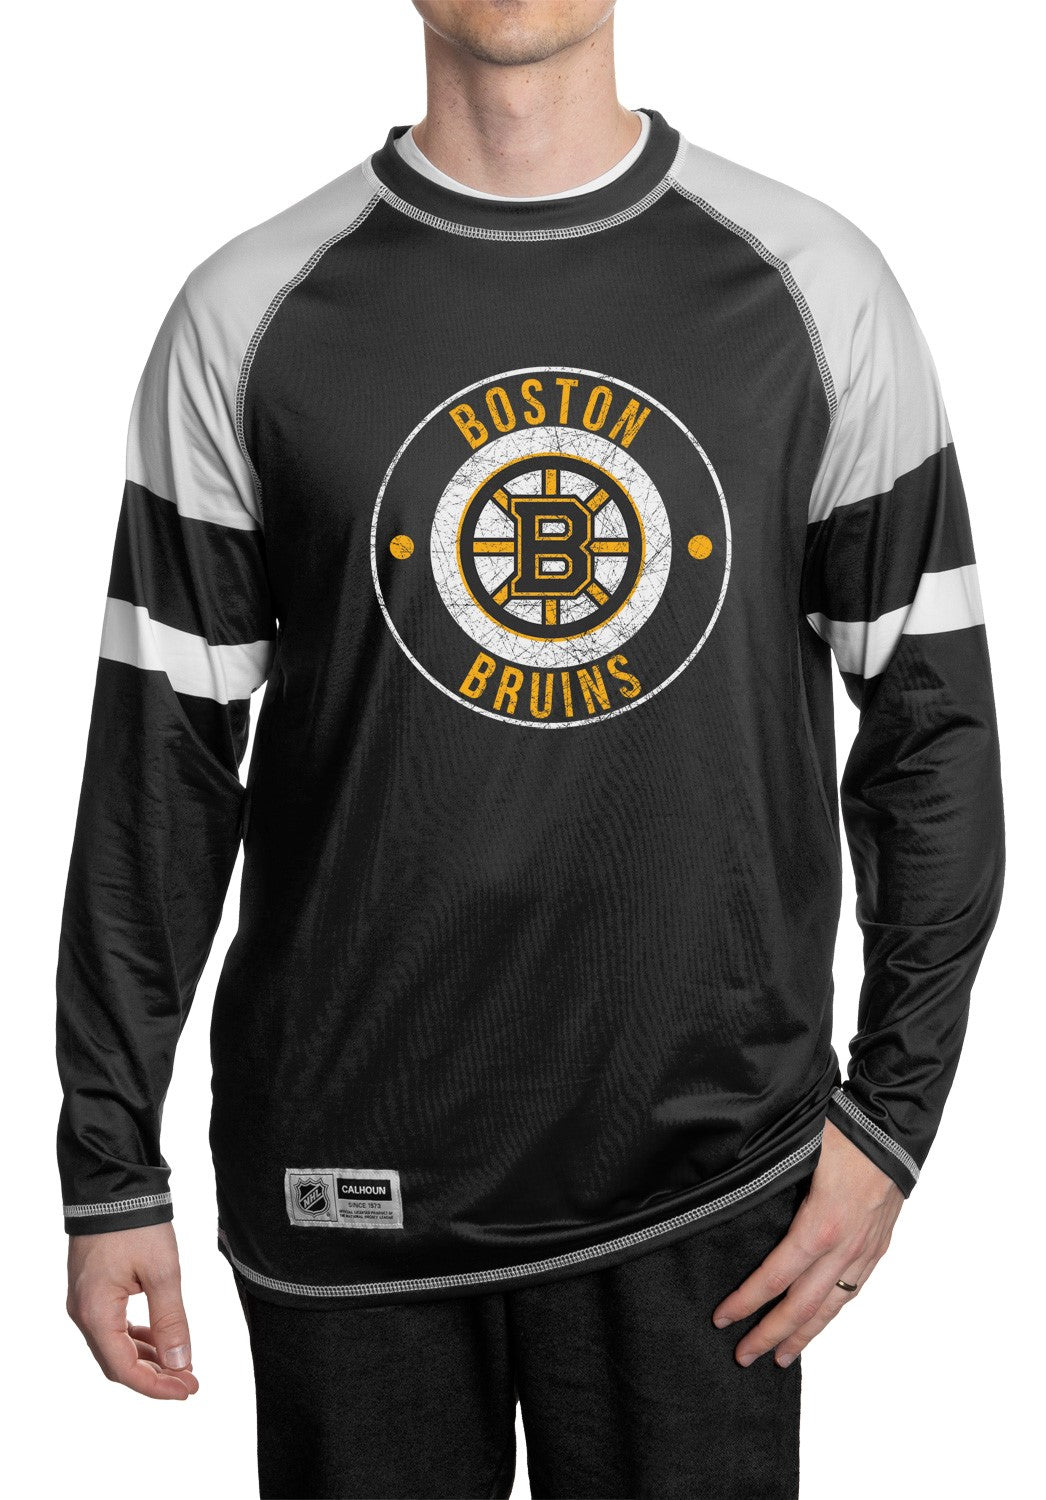 Boston Bruins Thermal Long Sleeve Rash Guard Shirt